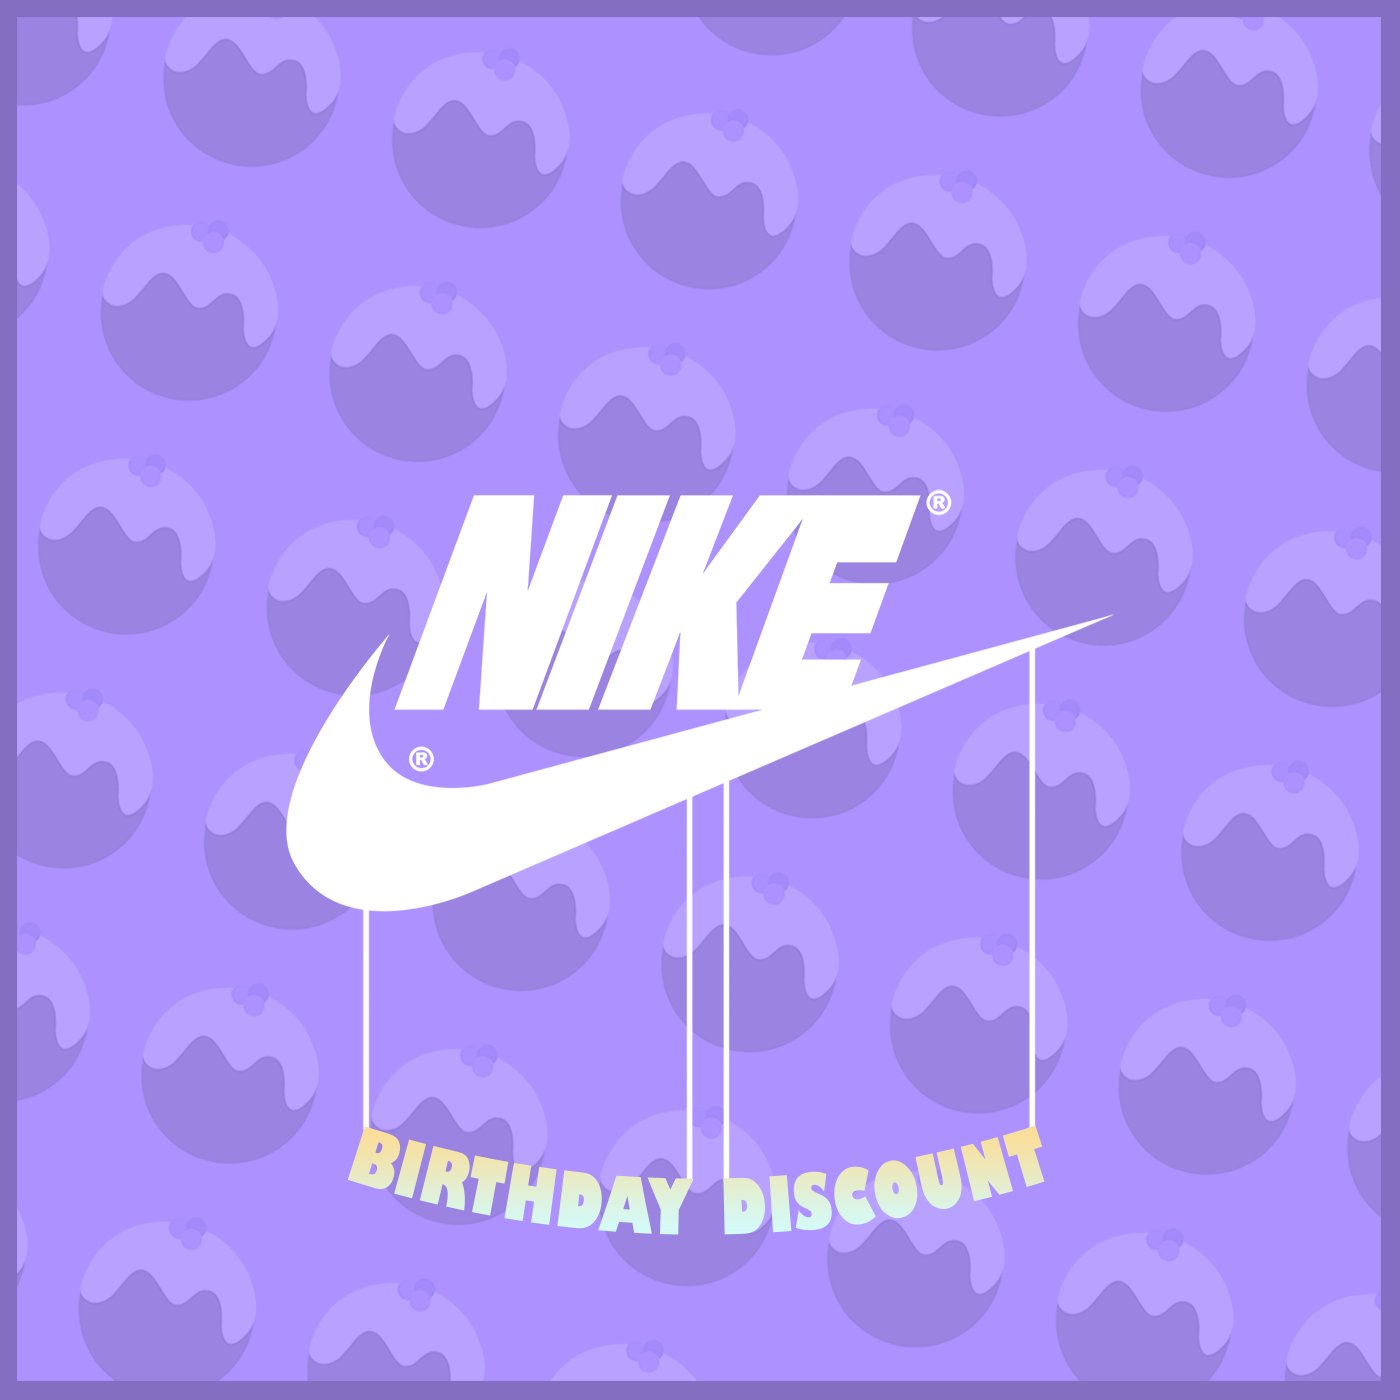 birthday nike discount